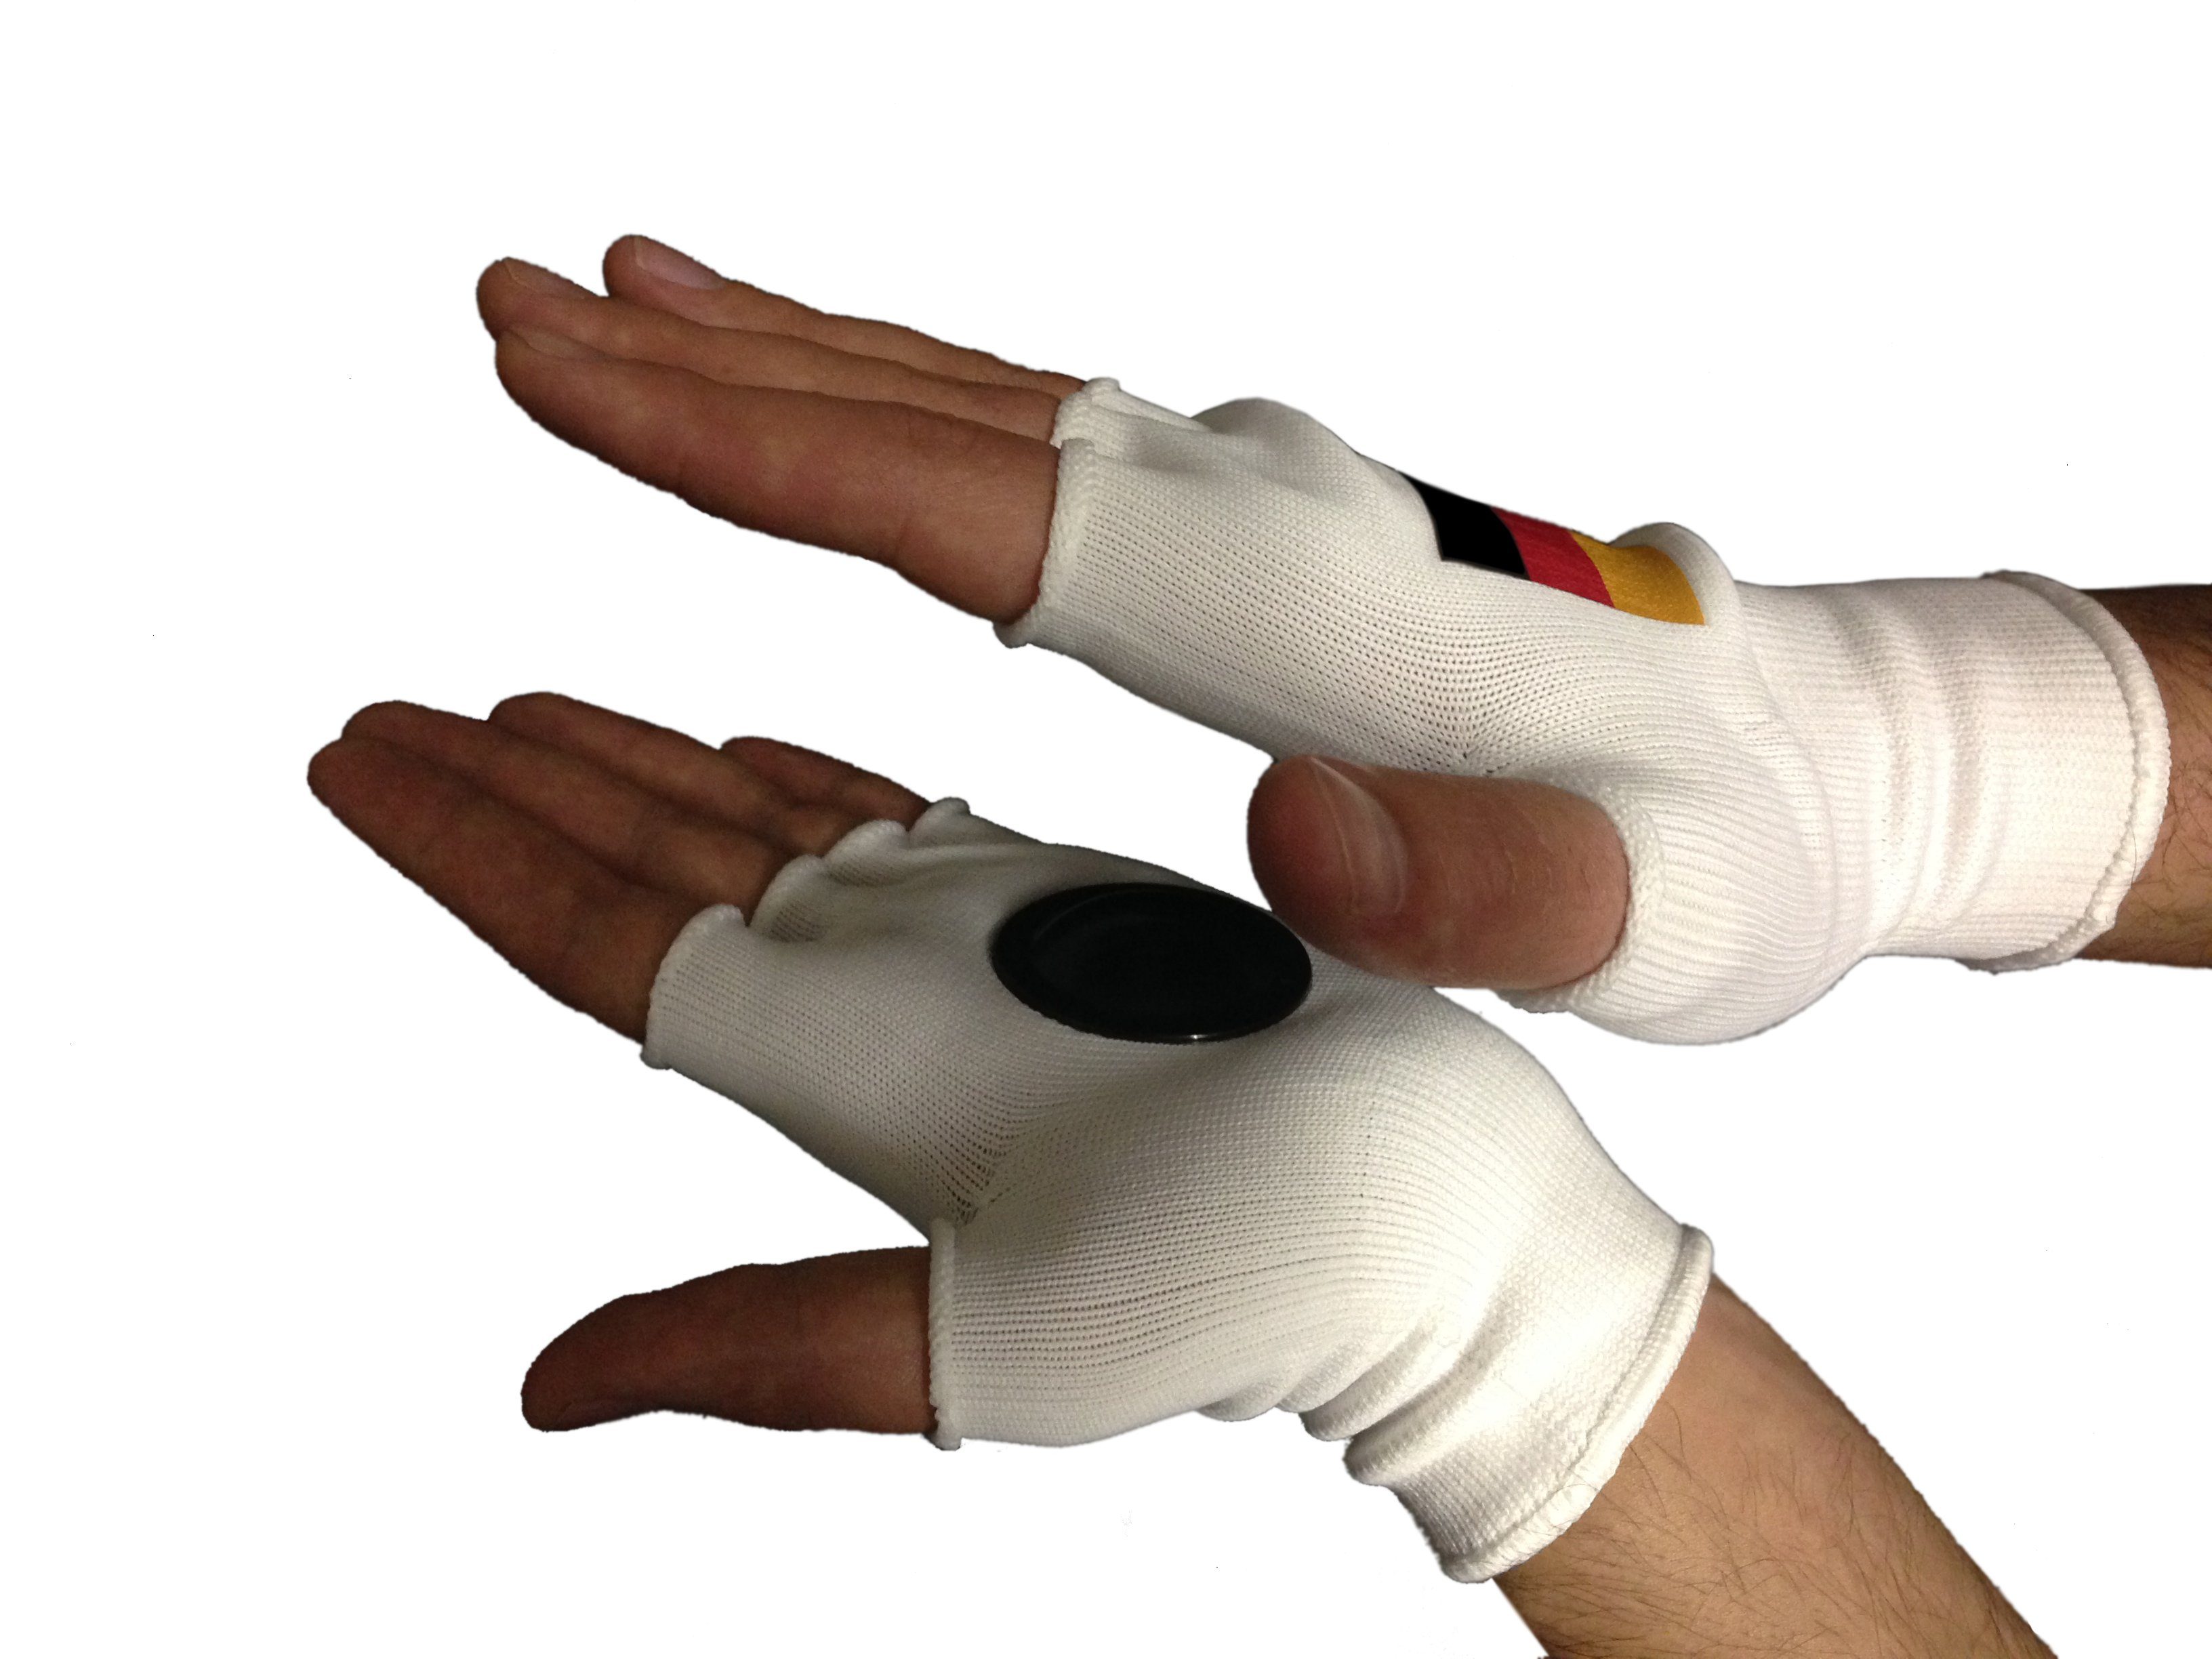 trends4cents Trikot-Handschuhe Clip-Clappers Klatsch Uni Fahne der eingenähte Gr. Deutschland Handschuhe in Hartplastik-Halbkugeln Handfläche m